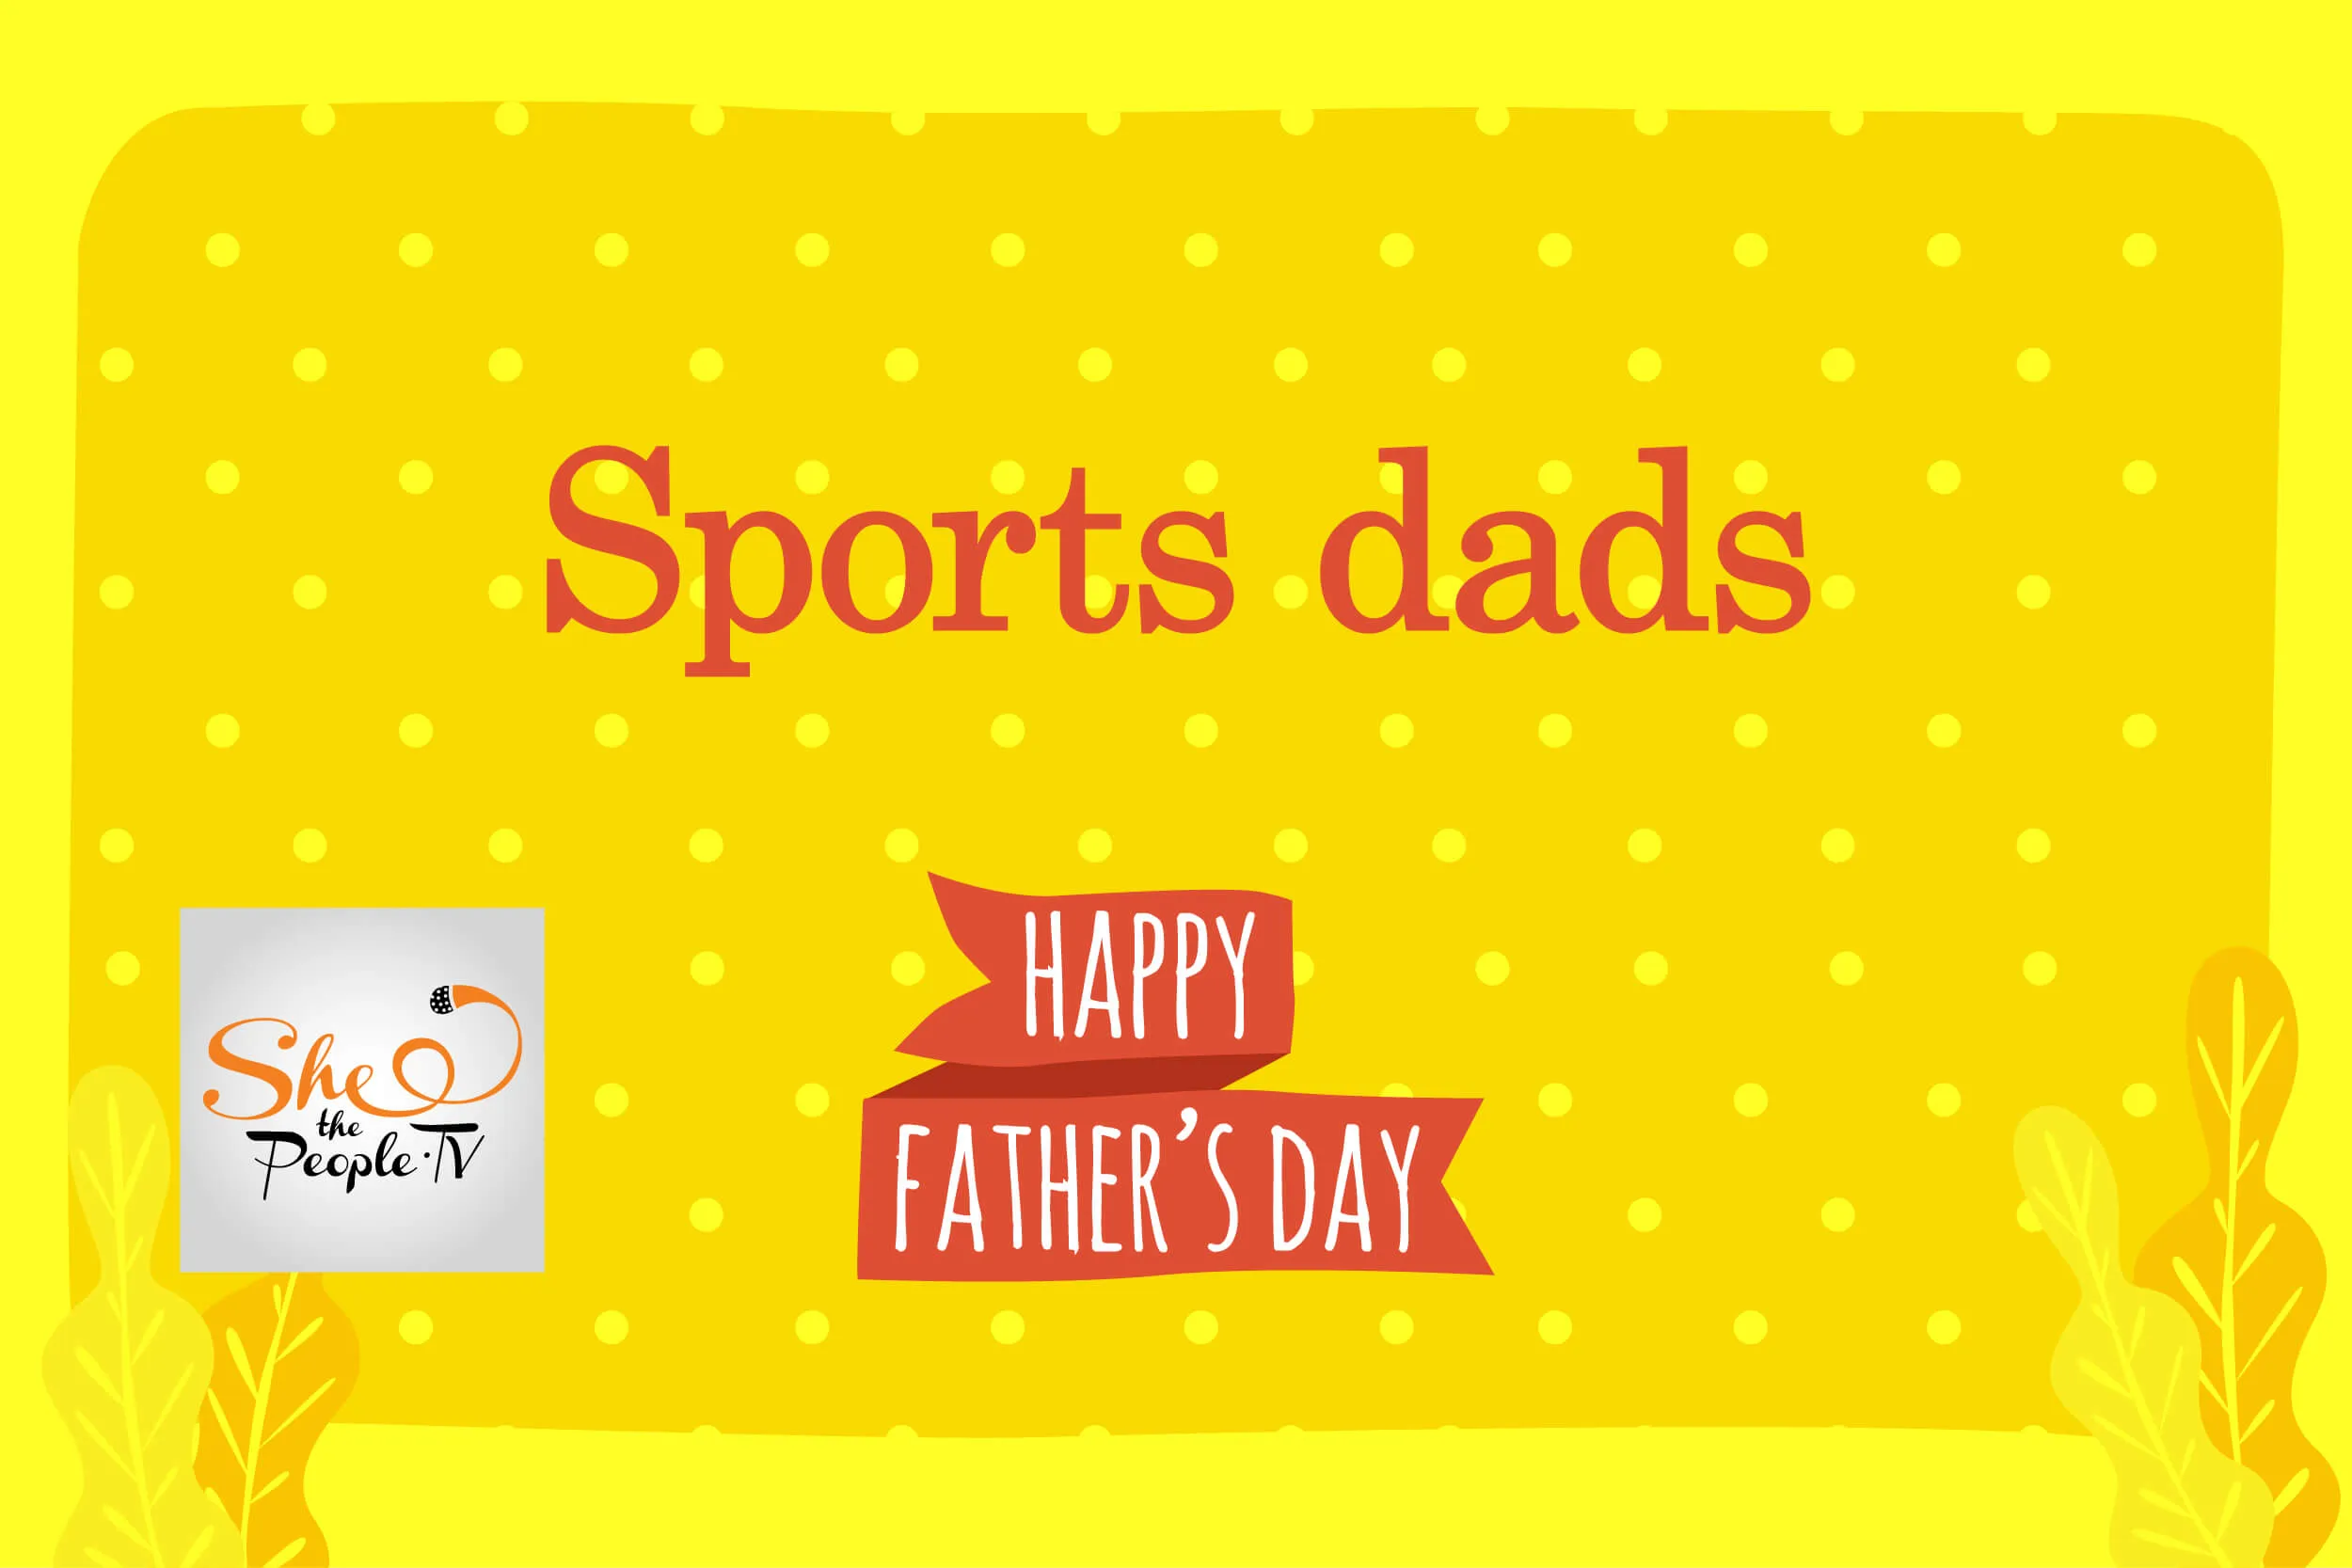 Daddies India's sportstars